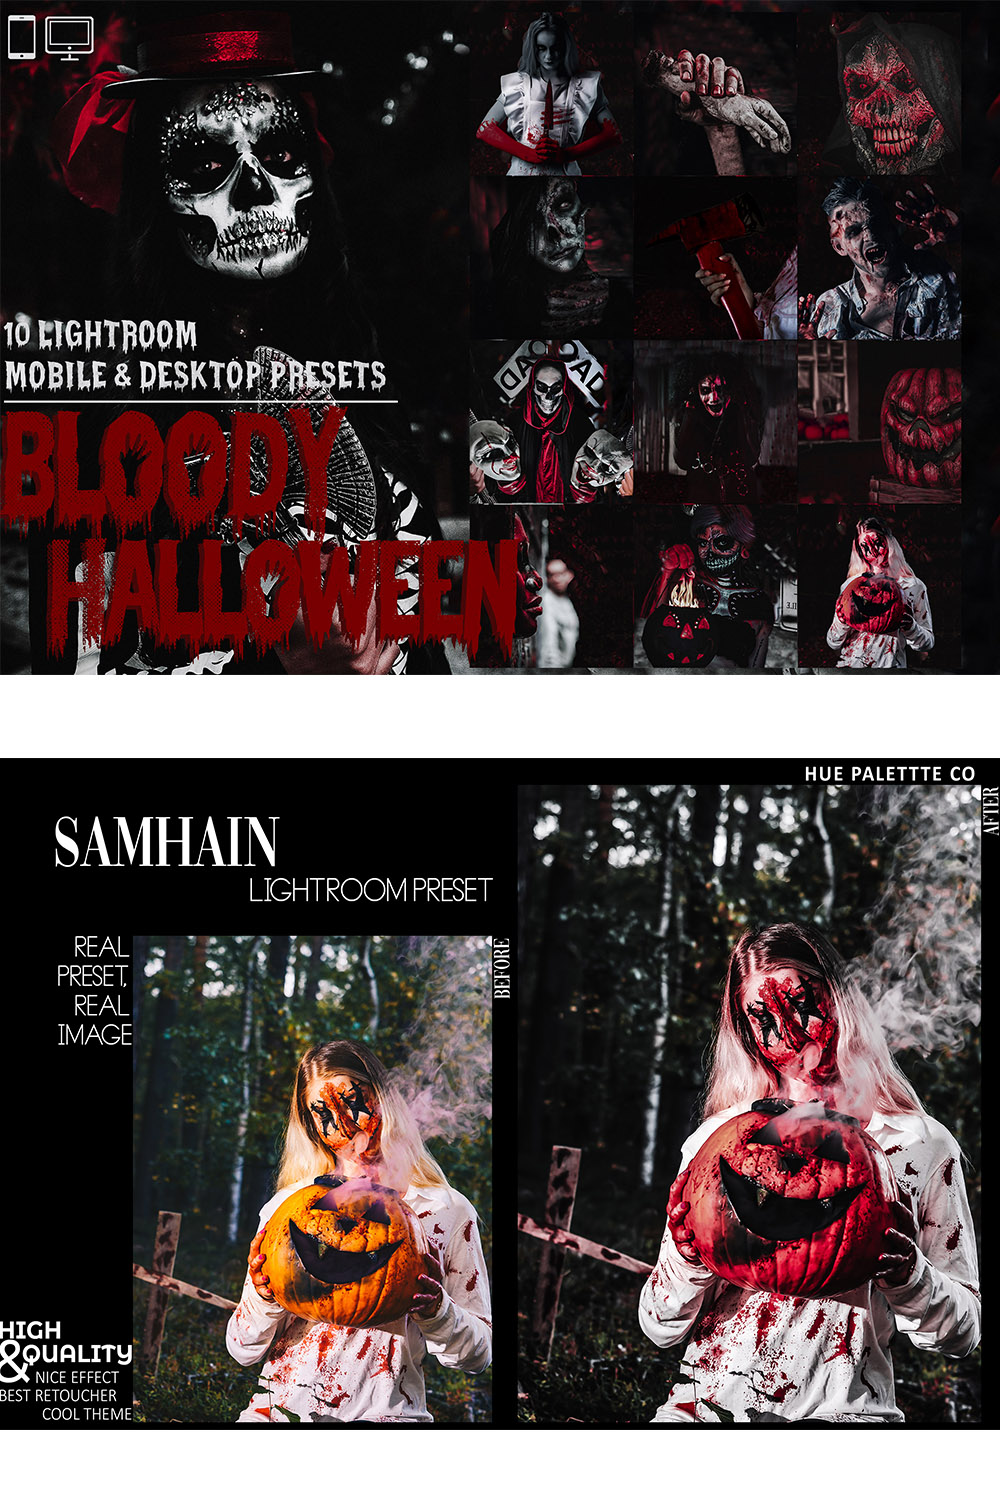 10 Bloody Halloween Lightroom Presets, Deep Moody Mobile Preset, Dark Horror Desktop, Lifestyle Portrait Theme Instagram LR Filter DNG, Red pinterest preview image.